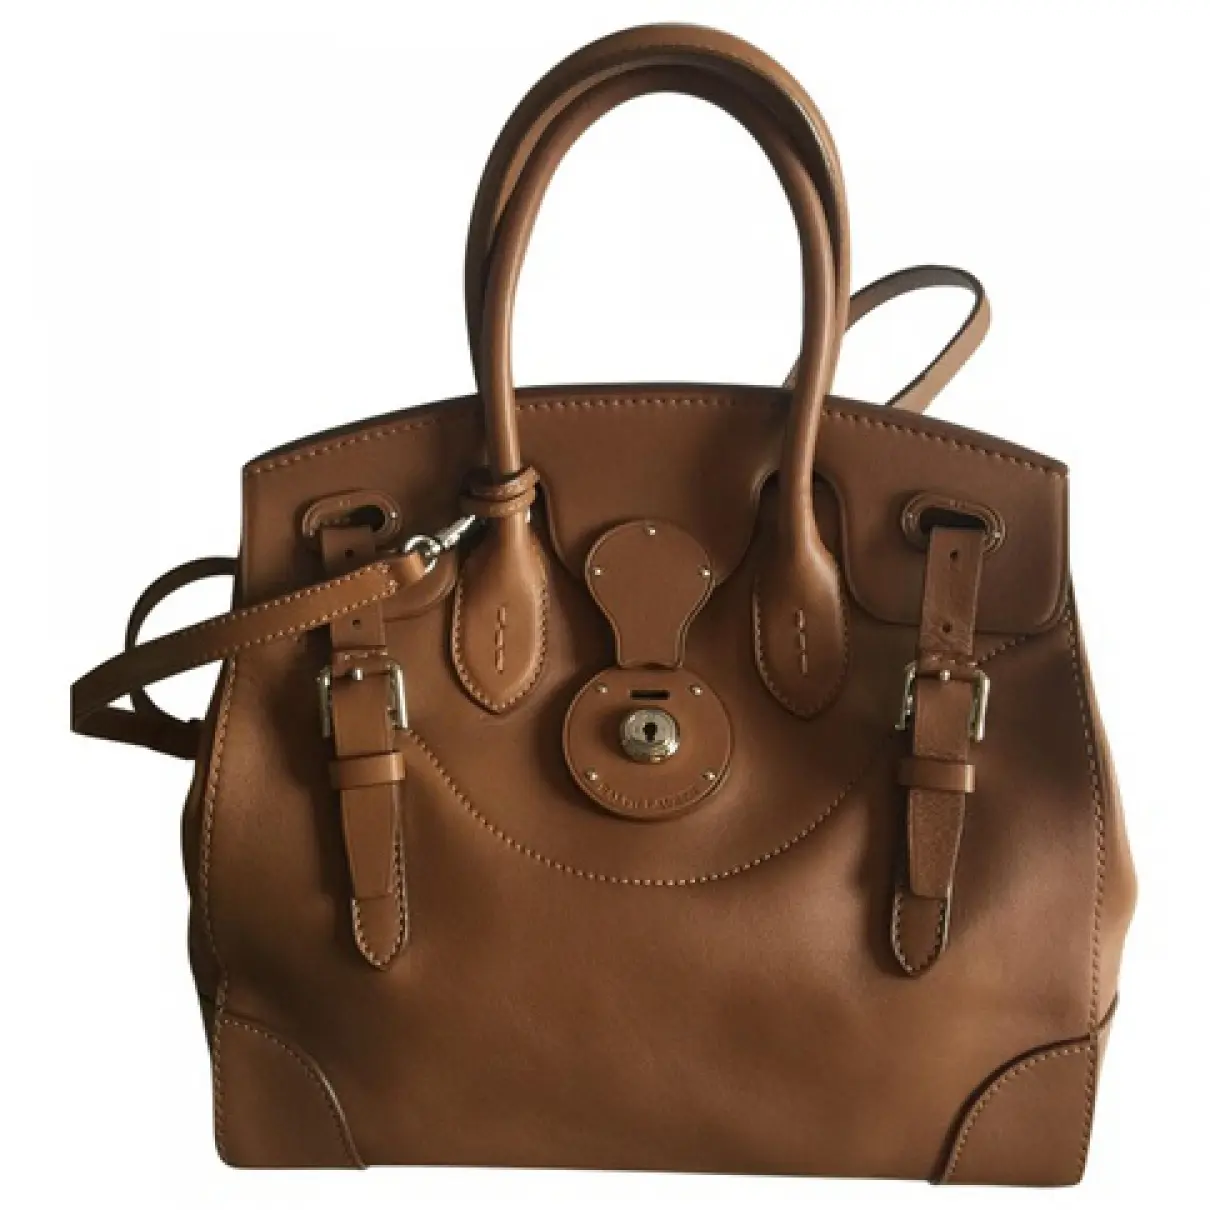 Brown Leather Handbag Ricky33 Ralph Lauren Collection